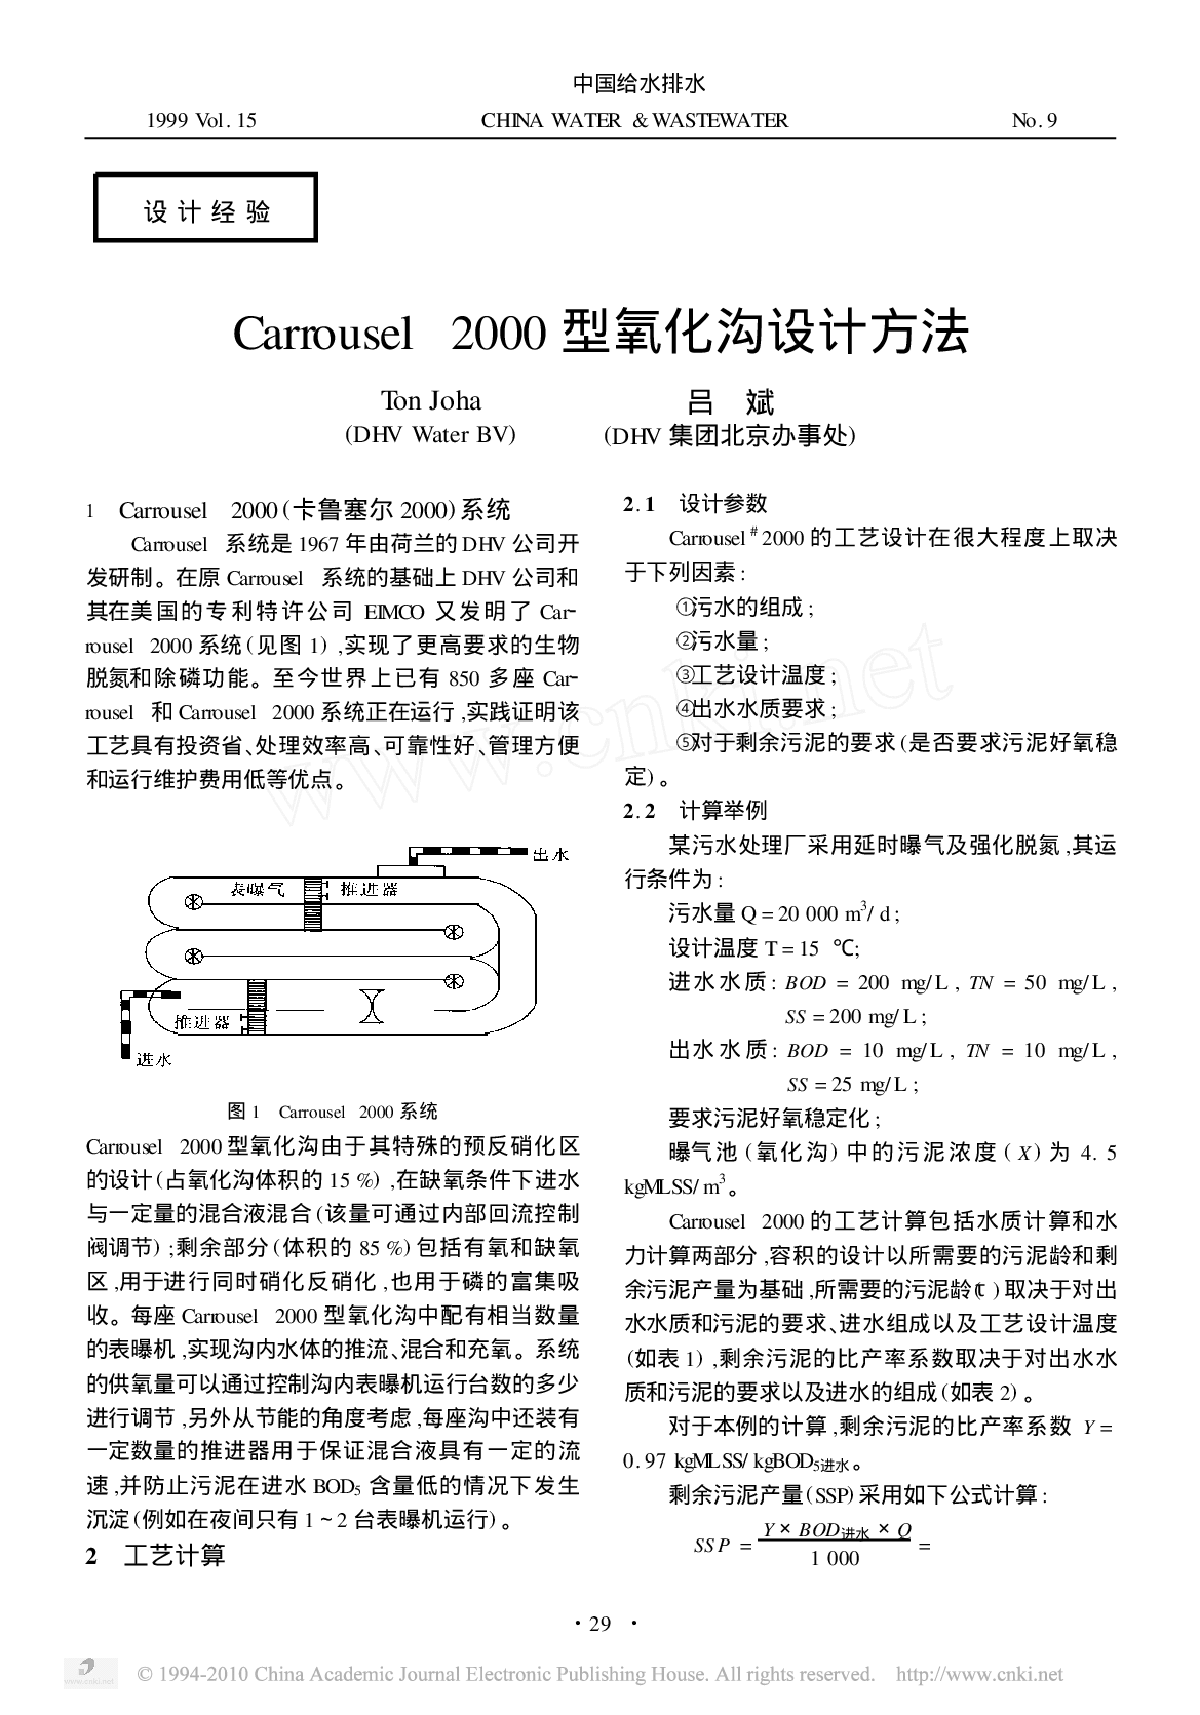 Carrousel_2000型氧化沟设计方法